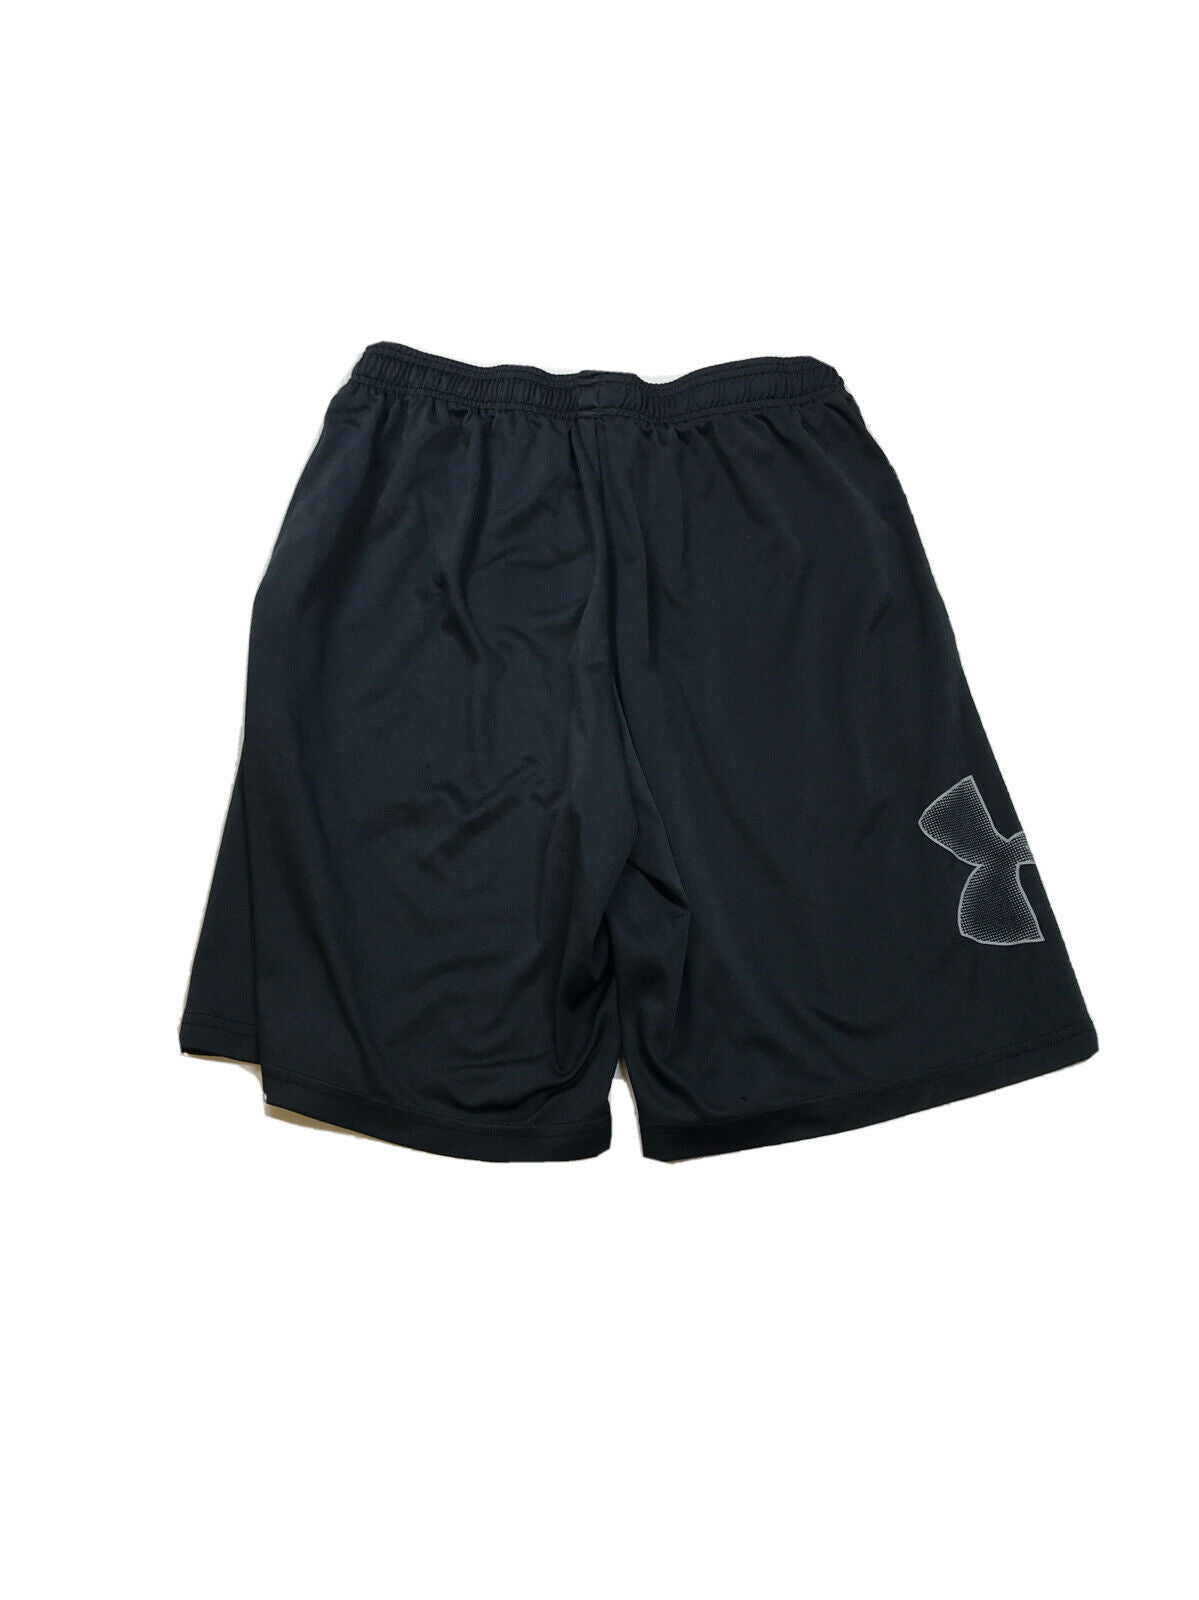 Under Armour Men's Black HeatGear Athletic Shorts w/ Pockets - S